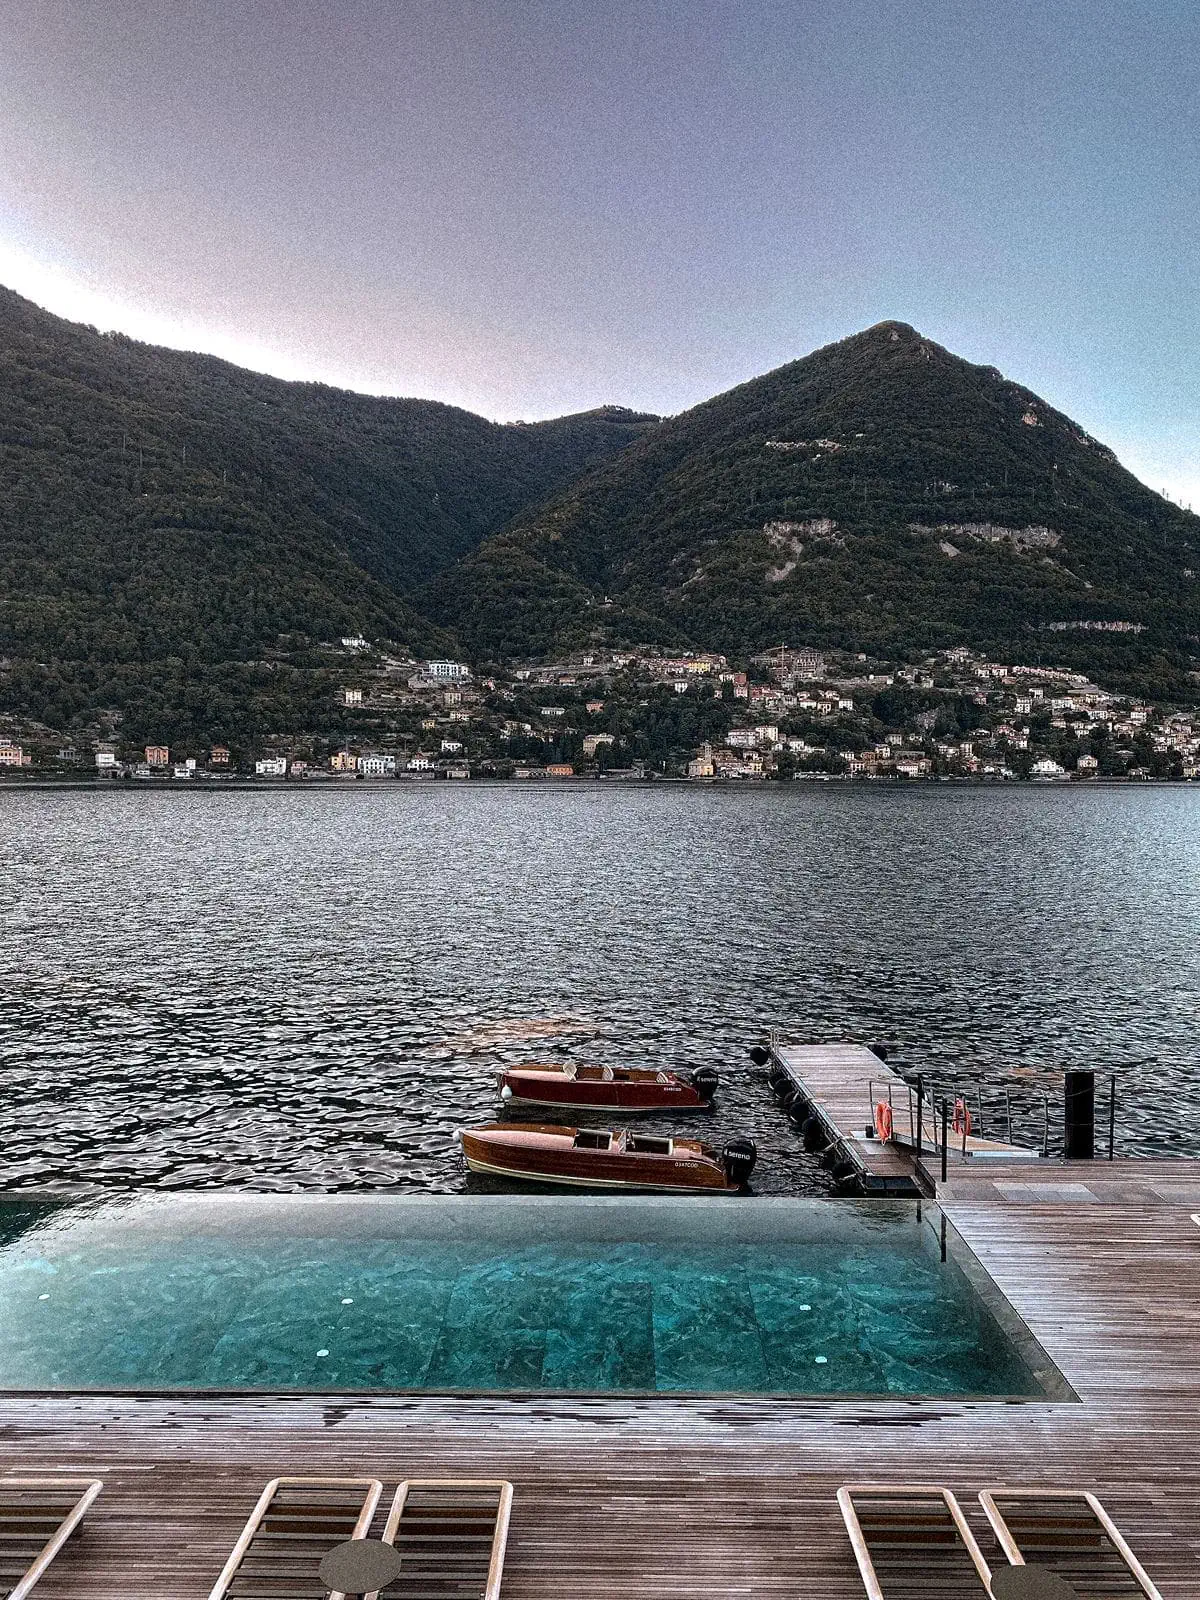 View of Lake Como from Sereno Hotel dock